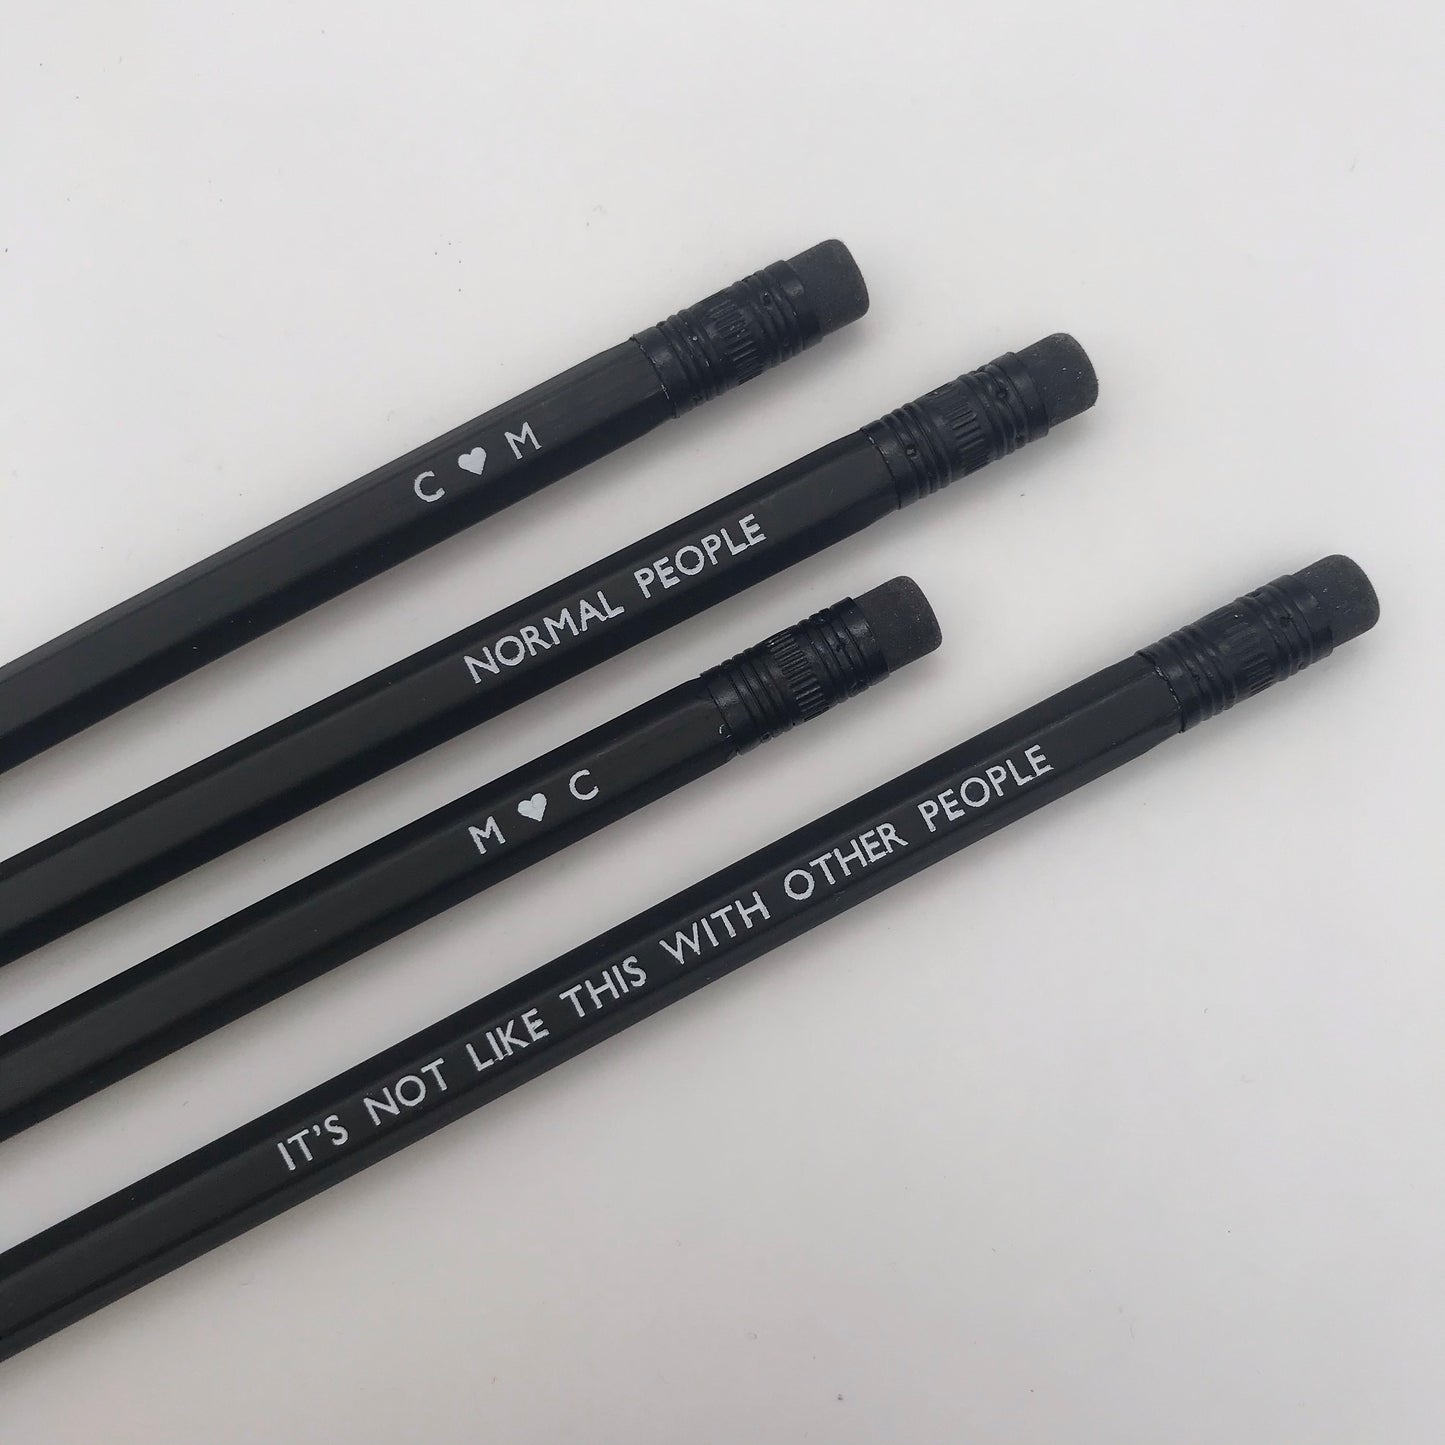 Normal People Pencil set